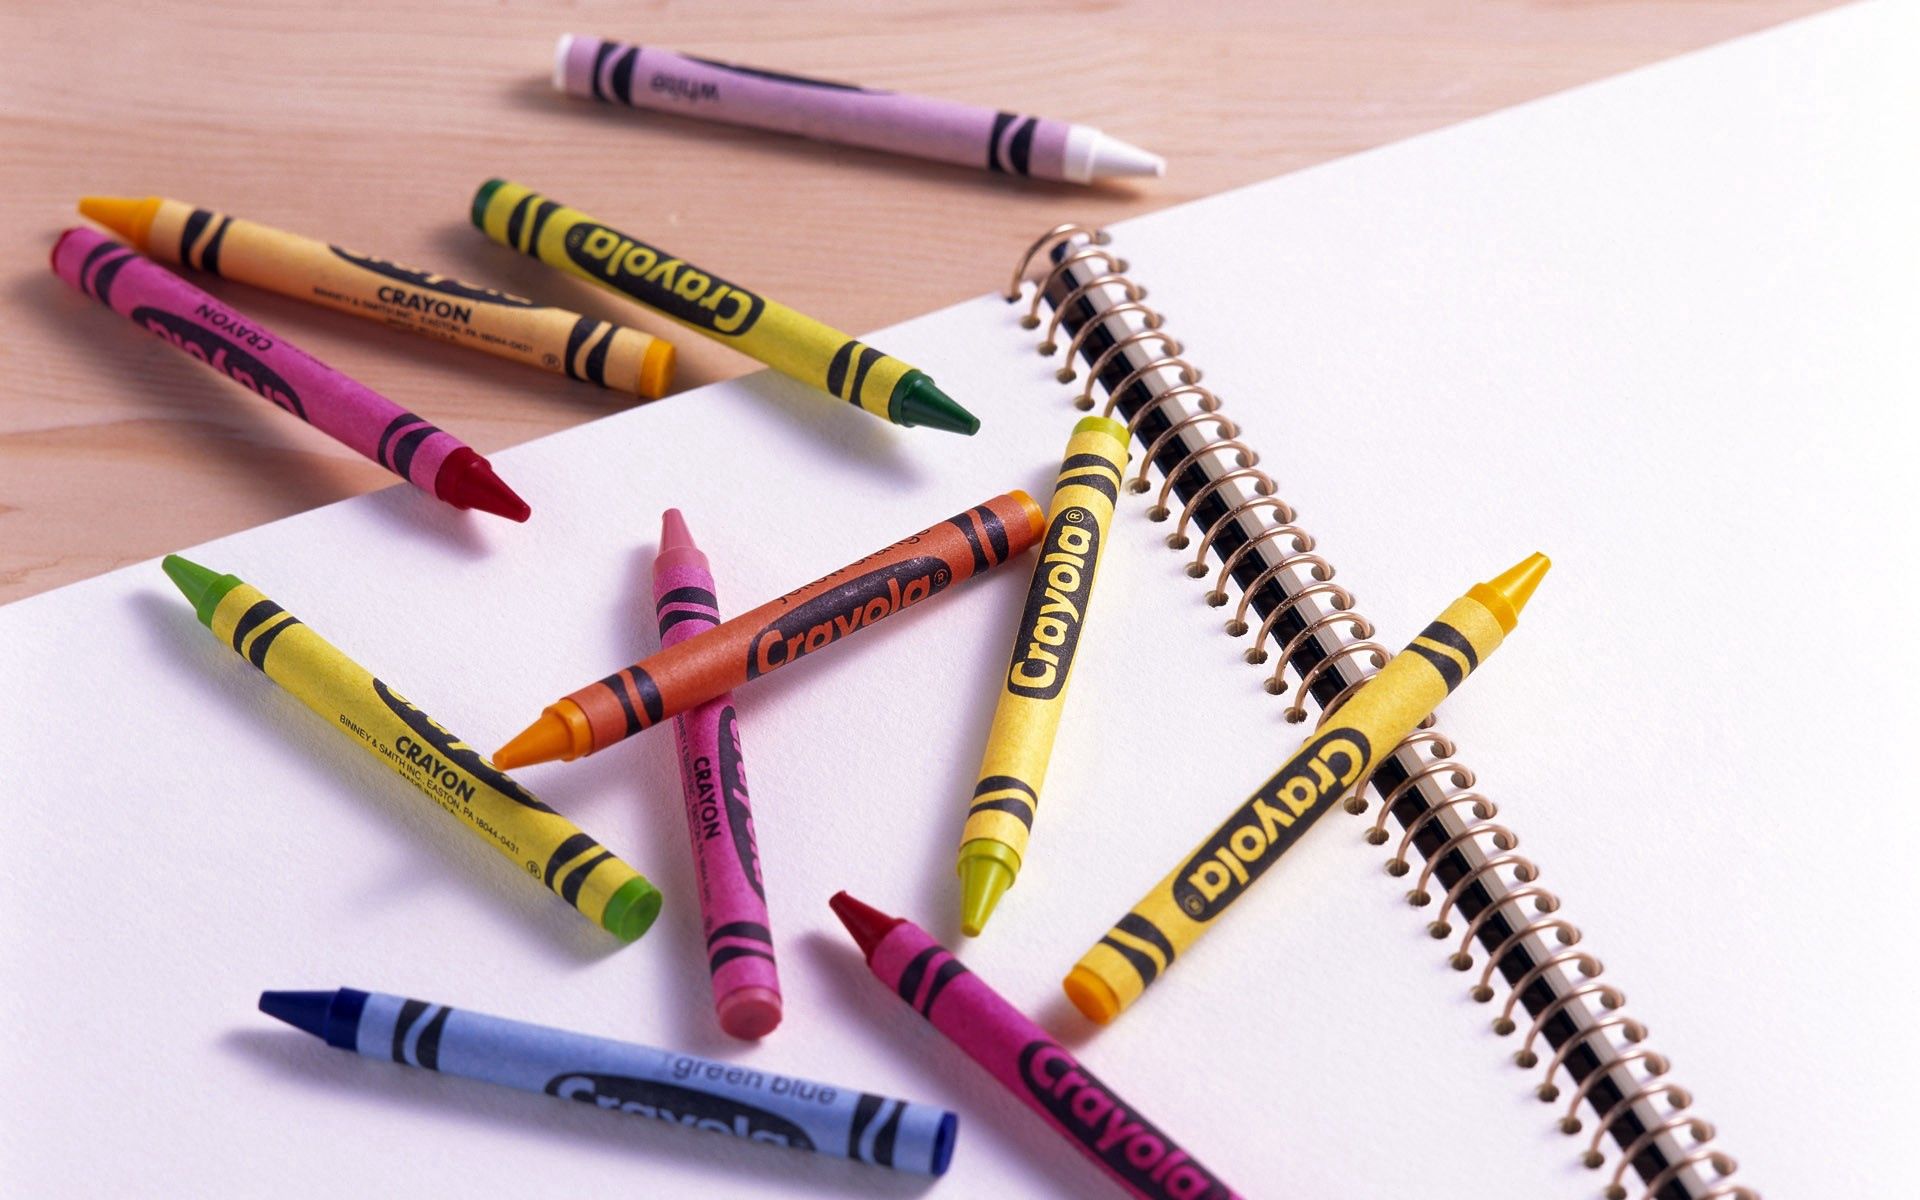 miscellanea, miscellaneous, multicolored, motley, spiral, pencil, sheets, notebook